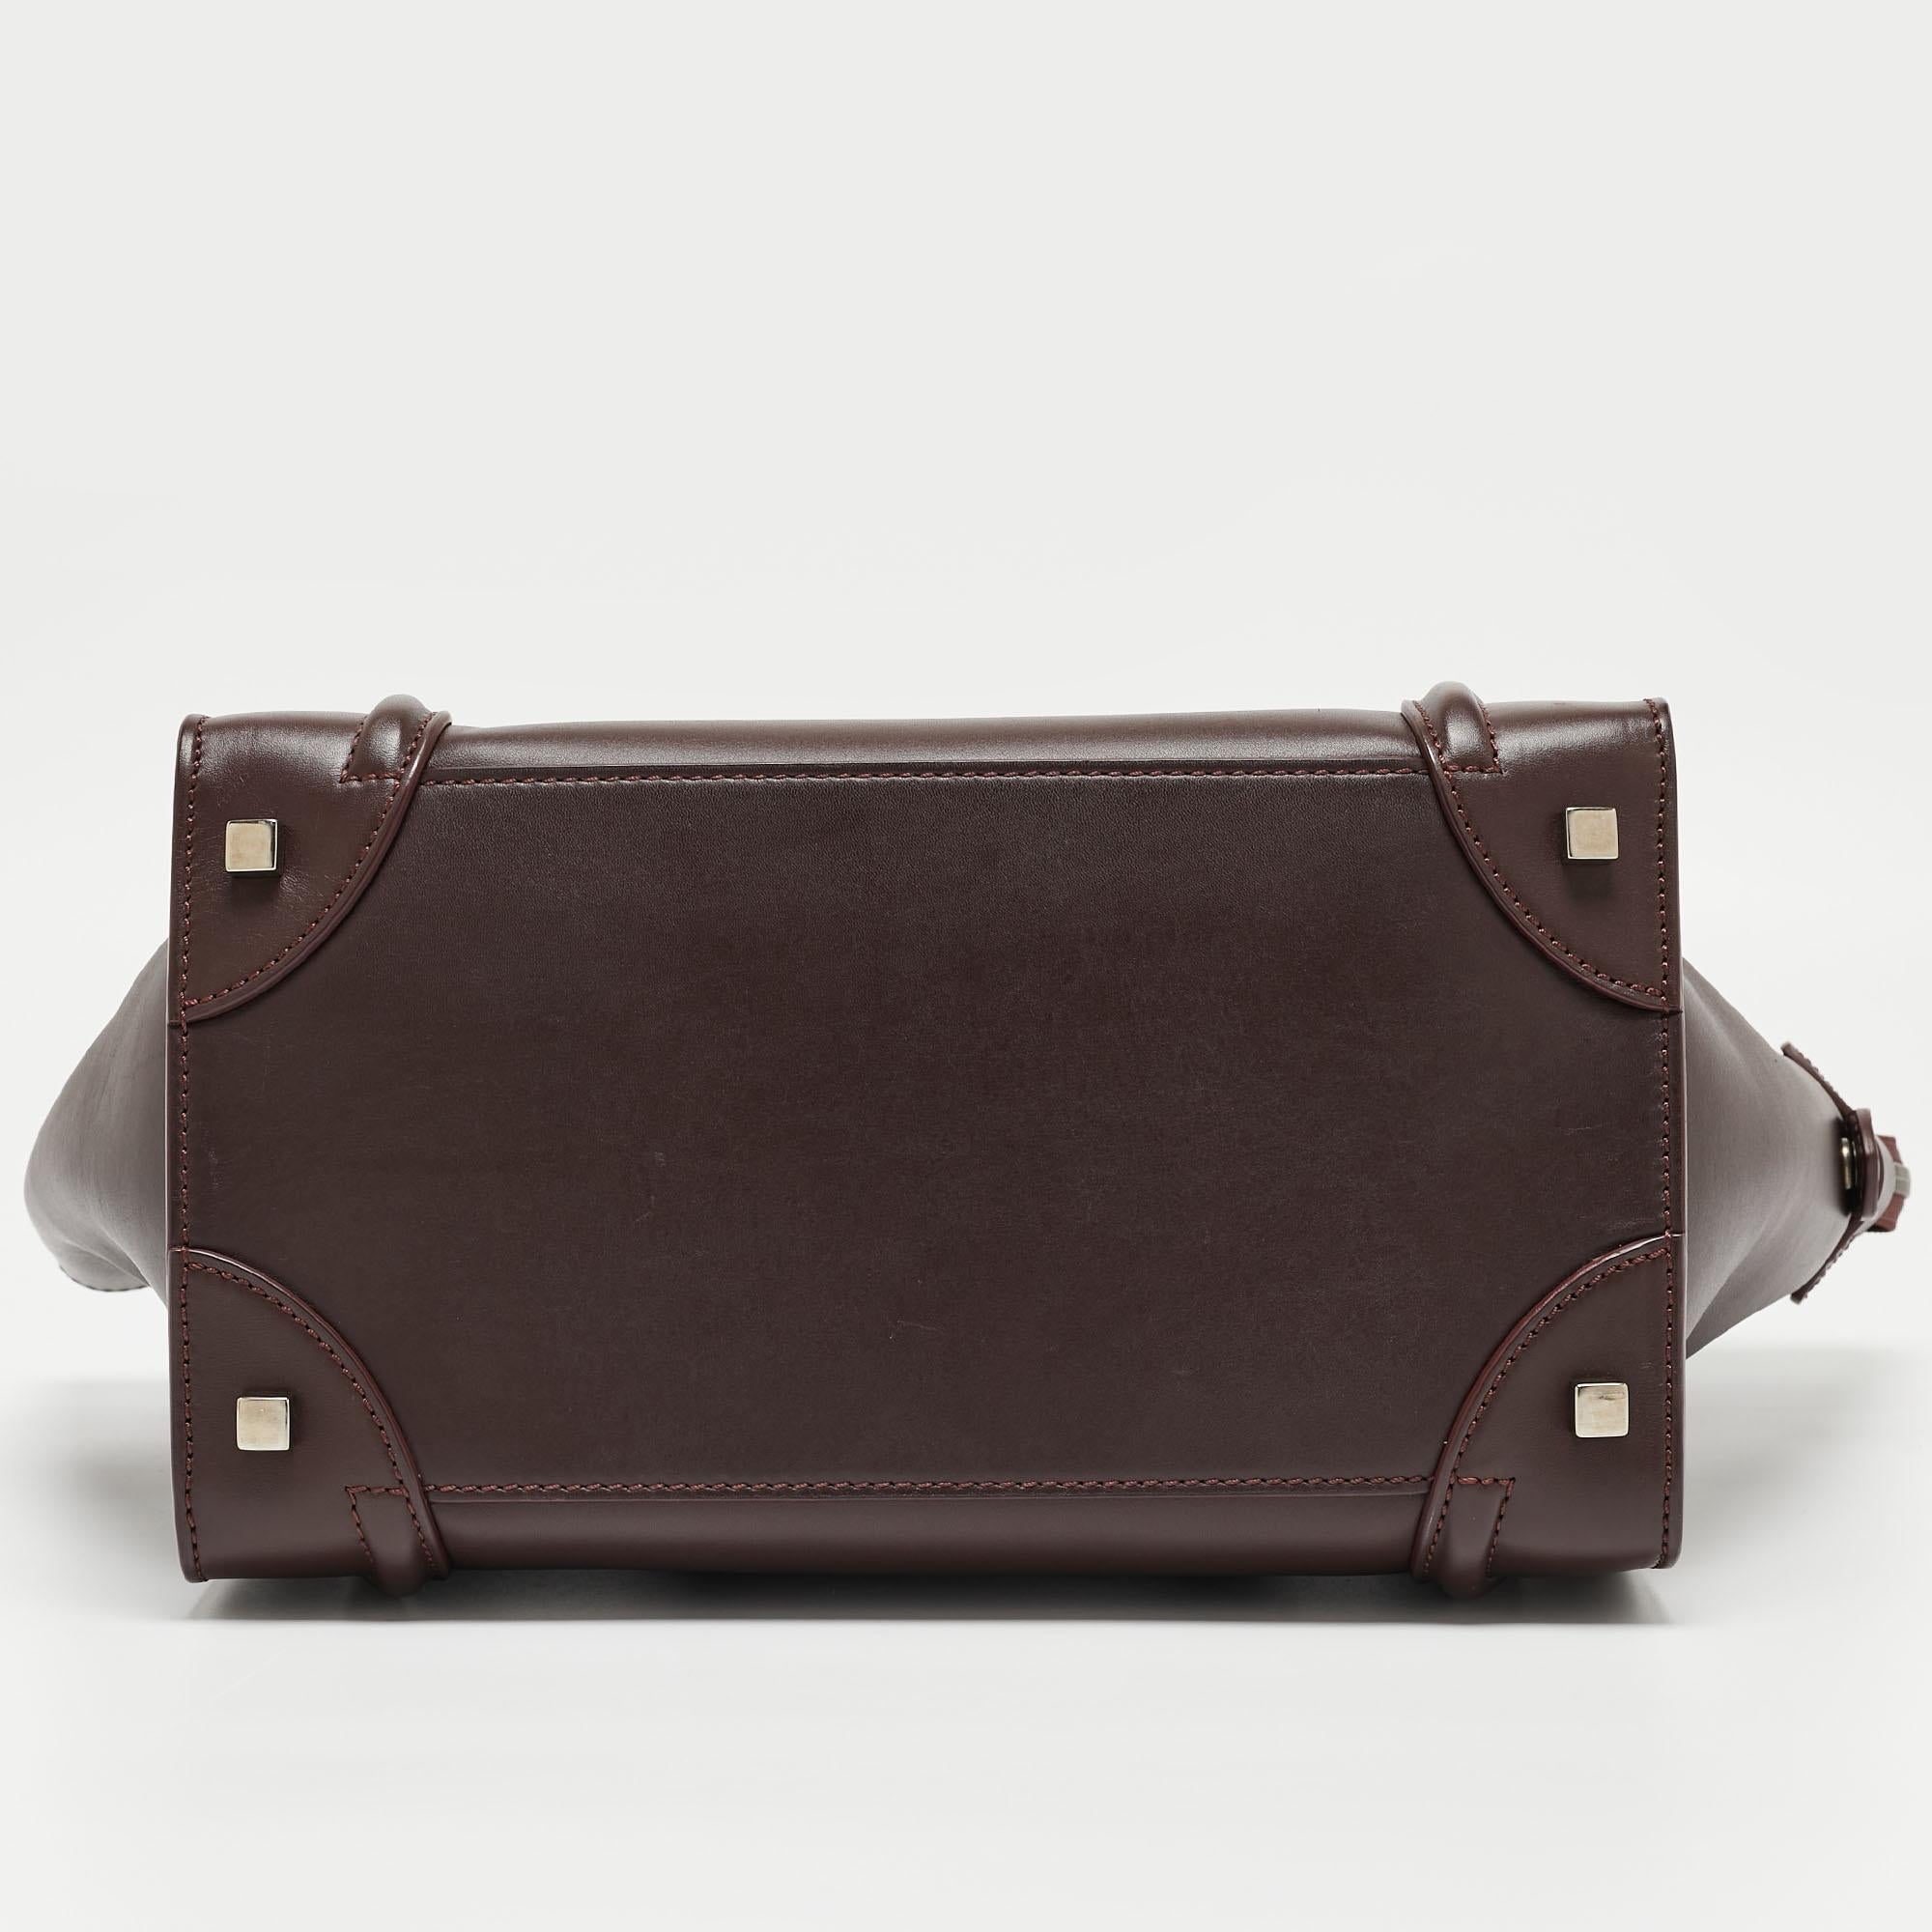 Celine Dark Burgundy Leather Mini Luggage Tote For Sale 3